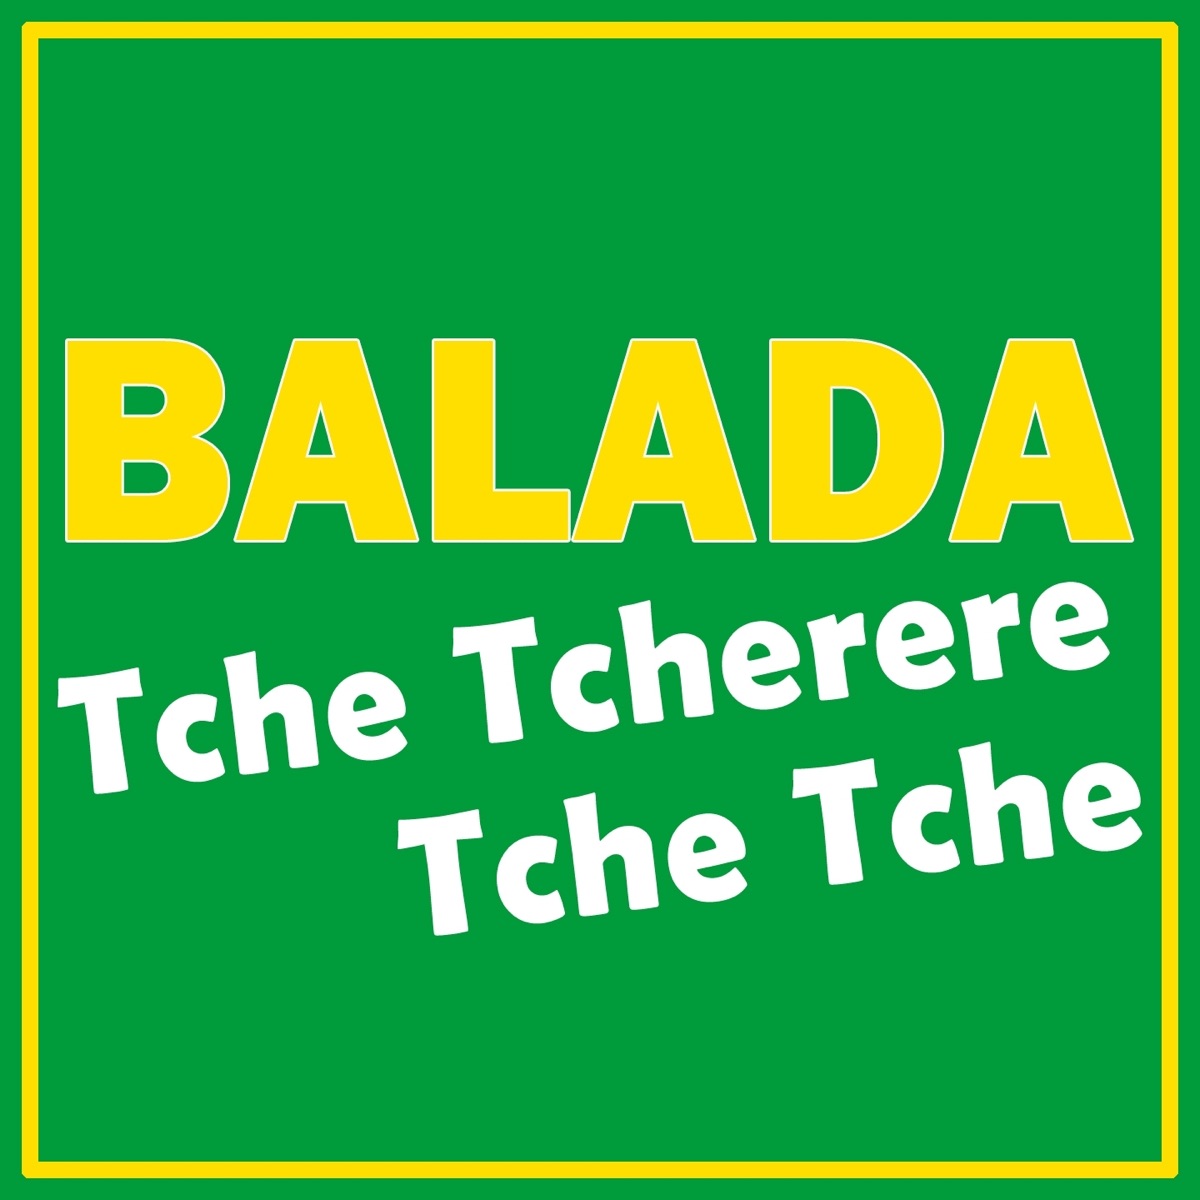 Tribute to Gusttavo Lima: Balada (Tche tcherere tche tche) - Single” álbum  de DJ Vivo en Apple Music